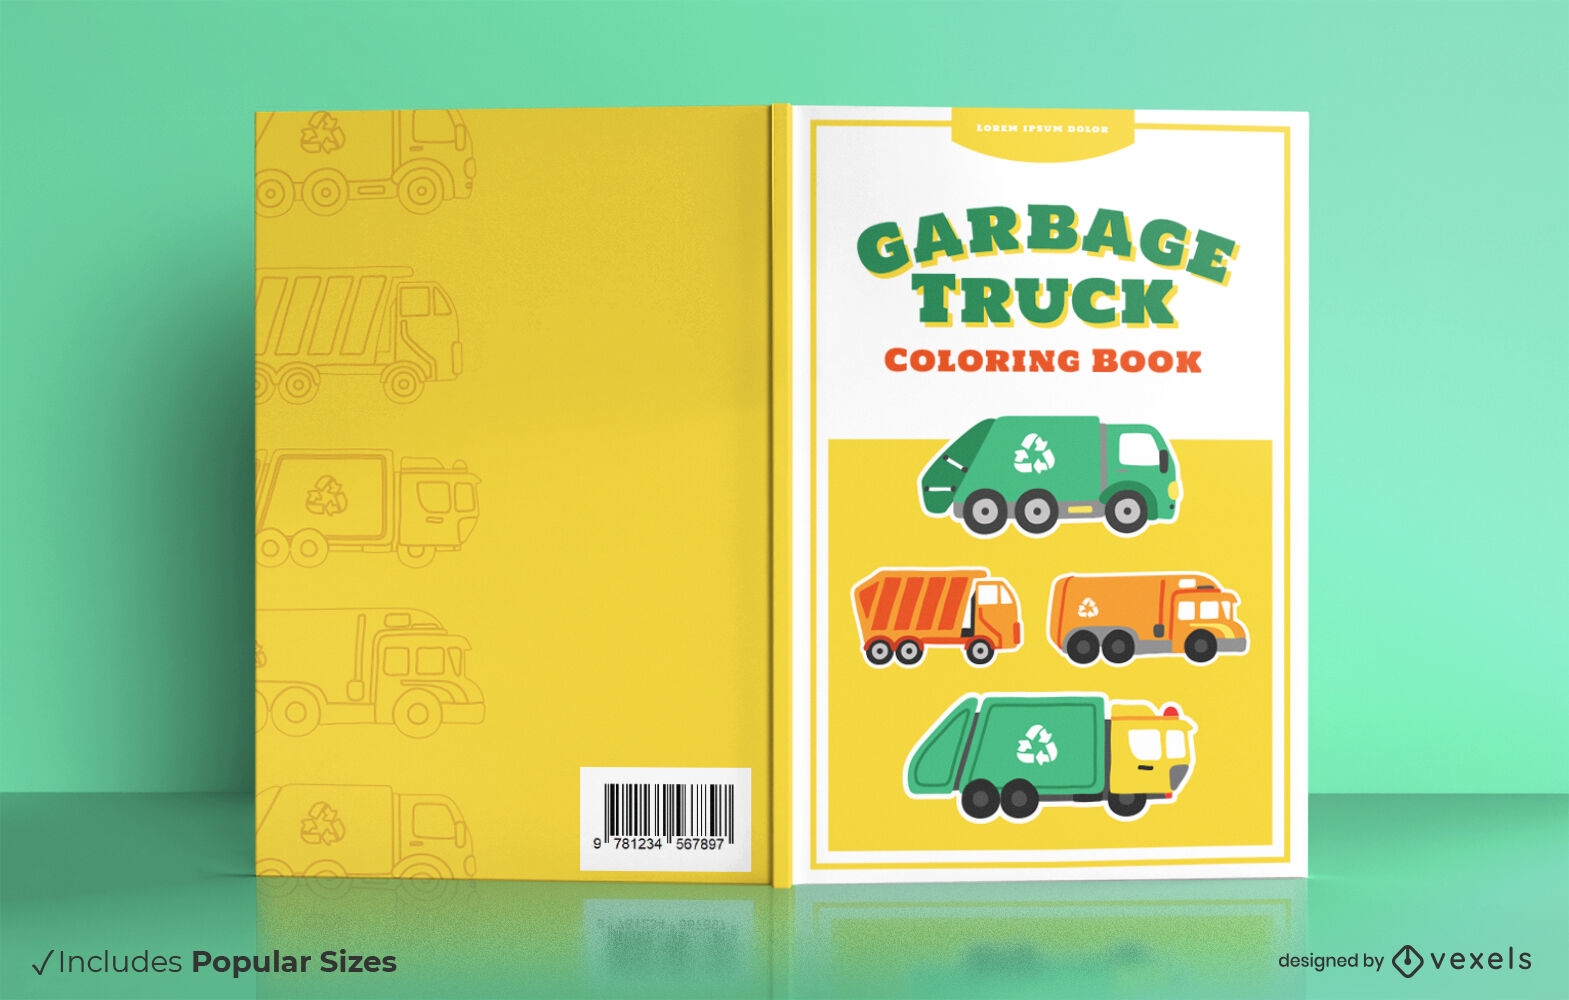 Garbage trucks coloring book cover design